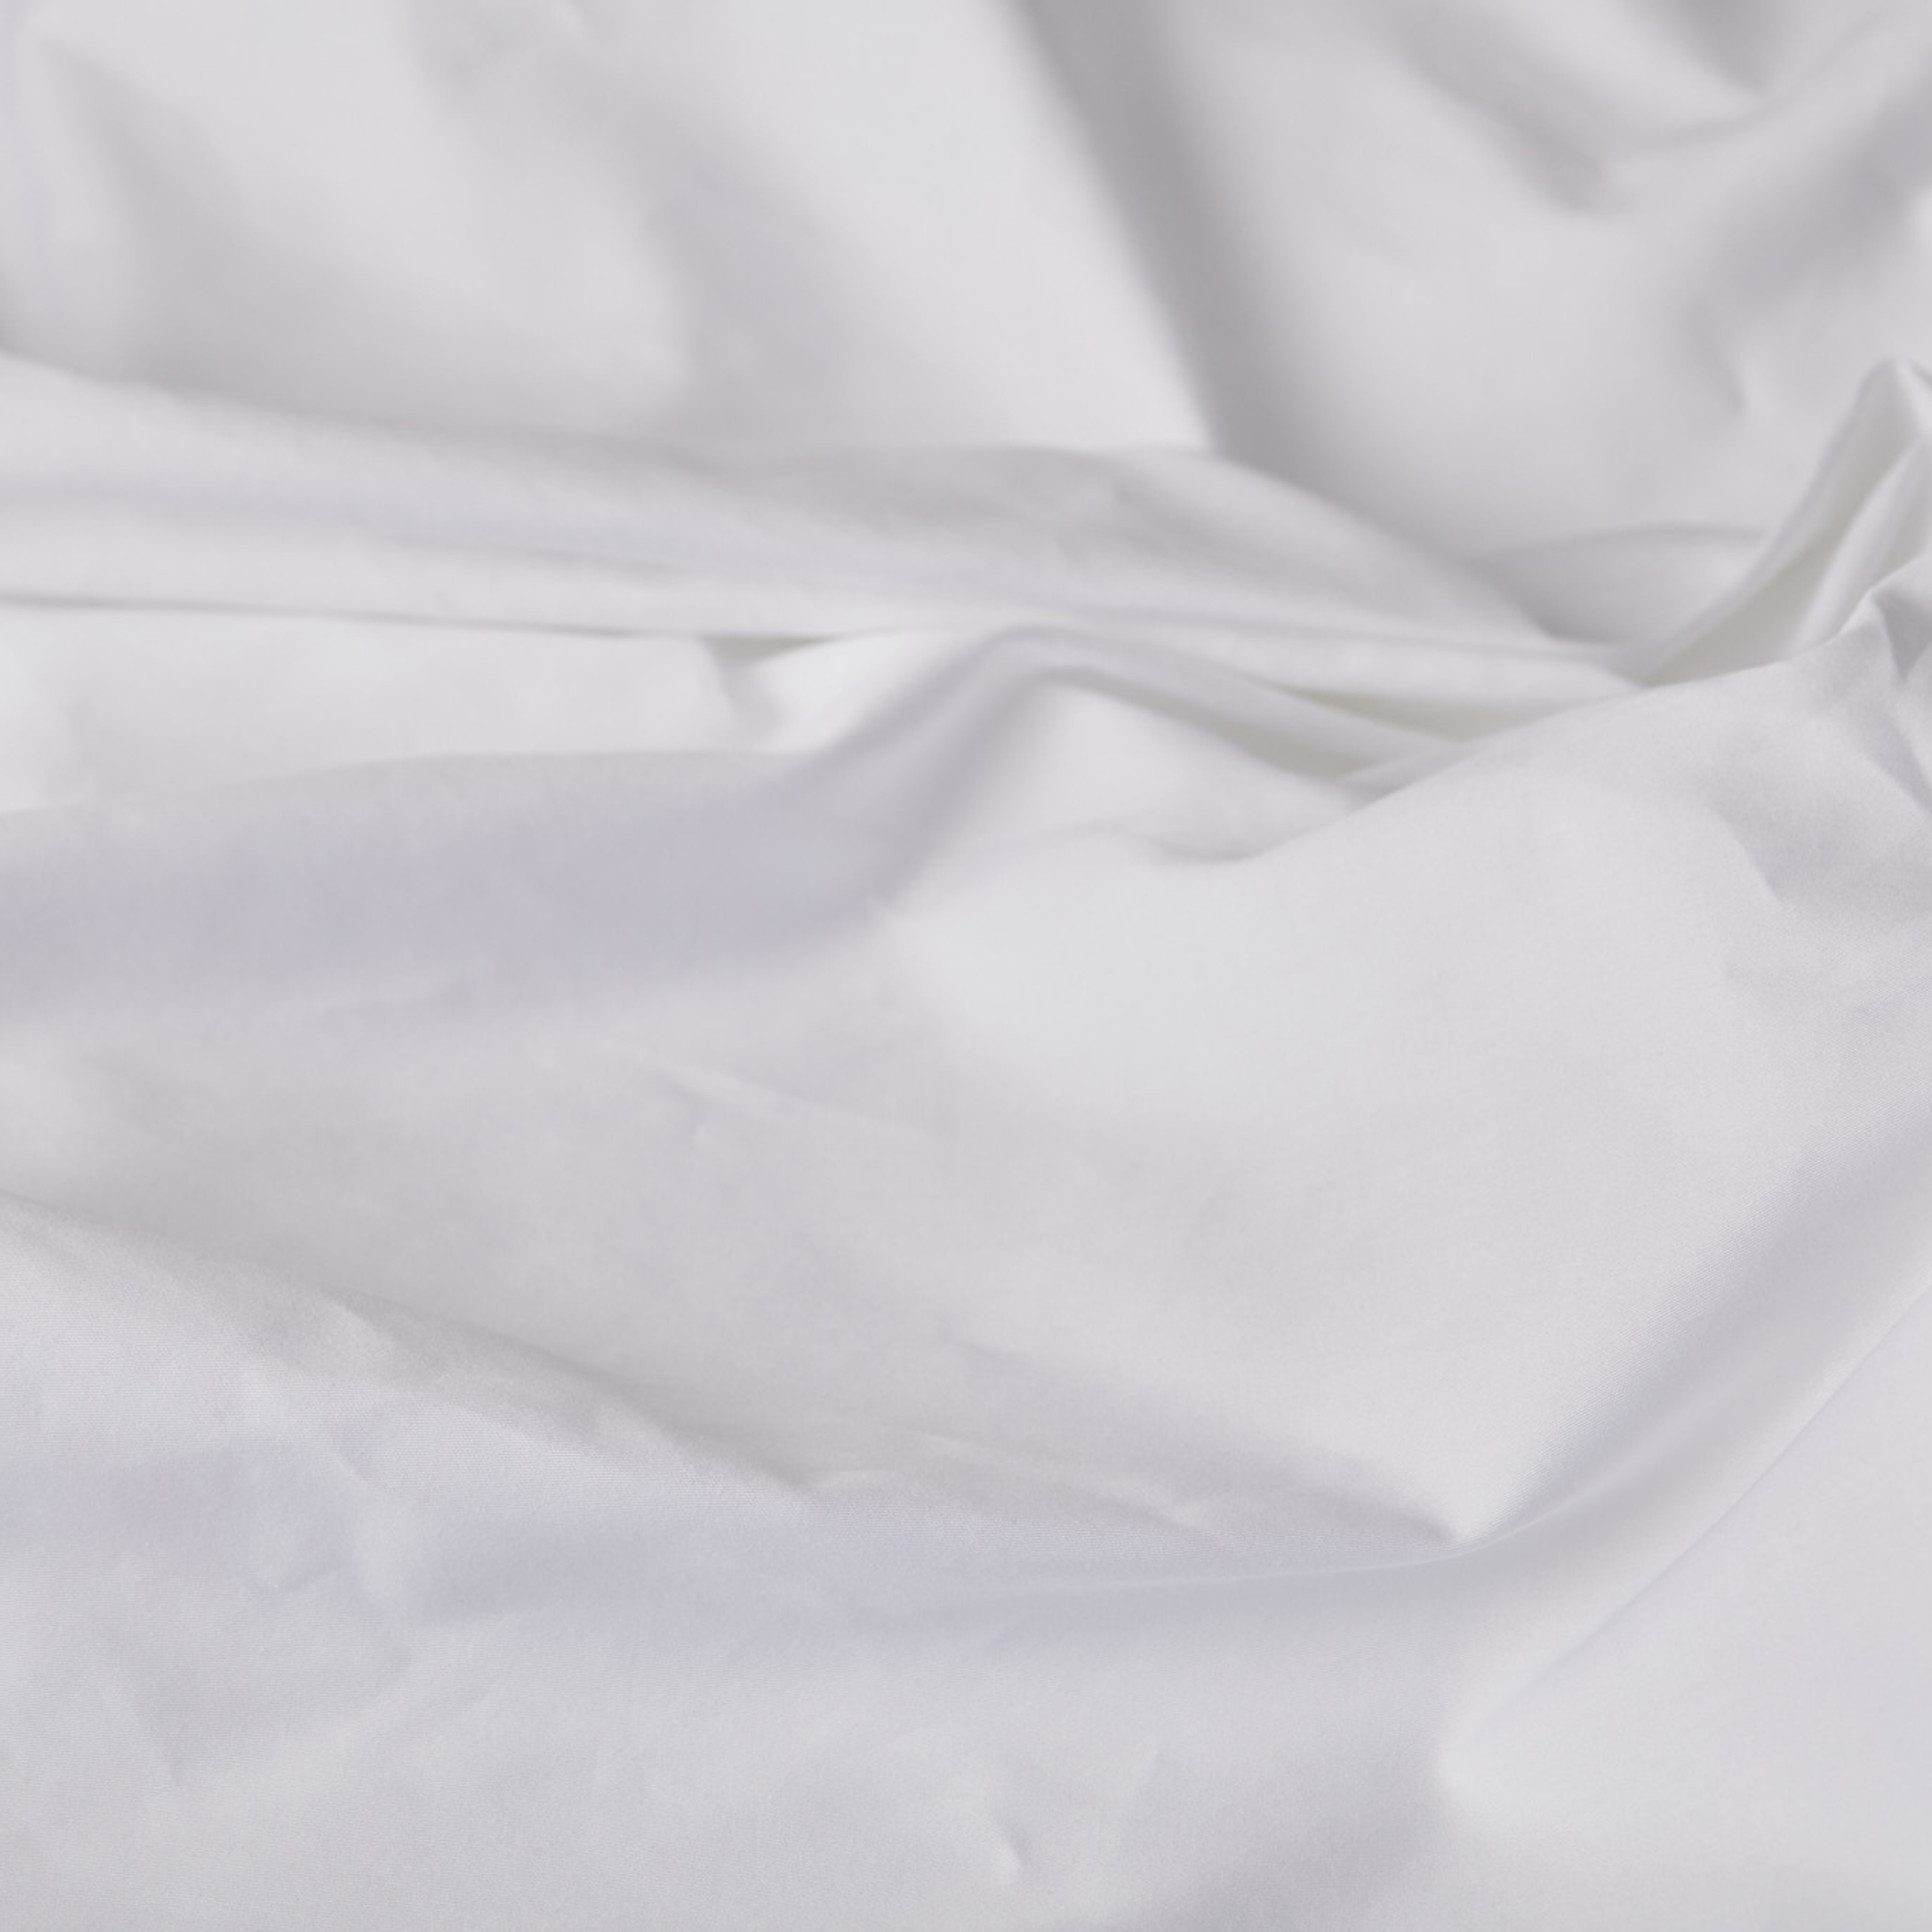 Cotton Rich Fabric Close Up White 2